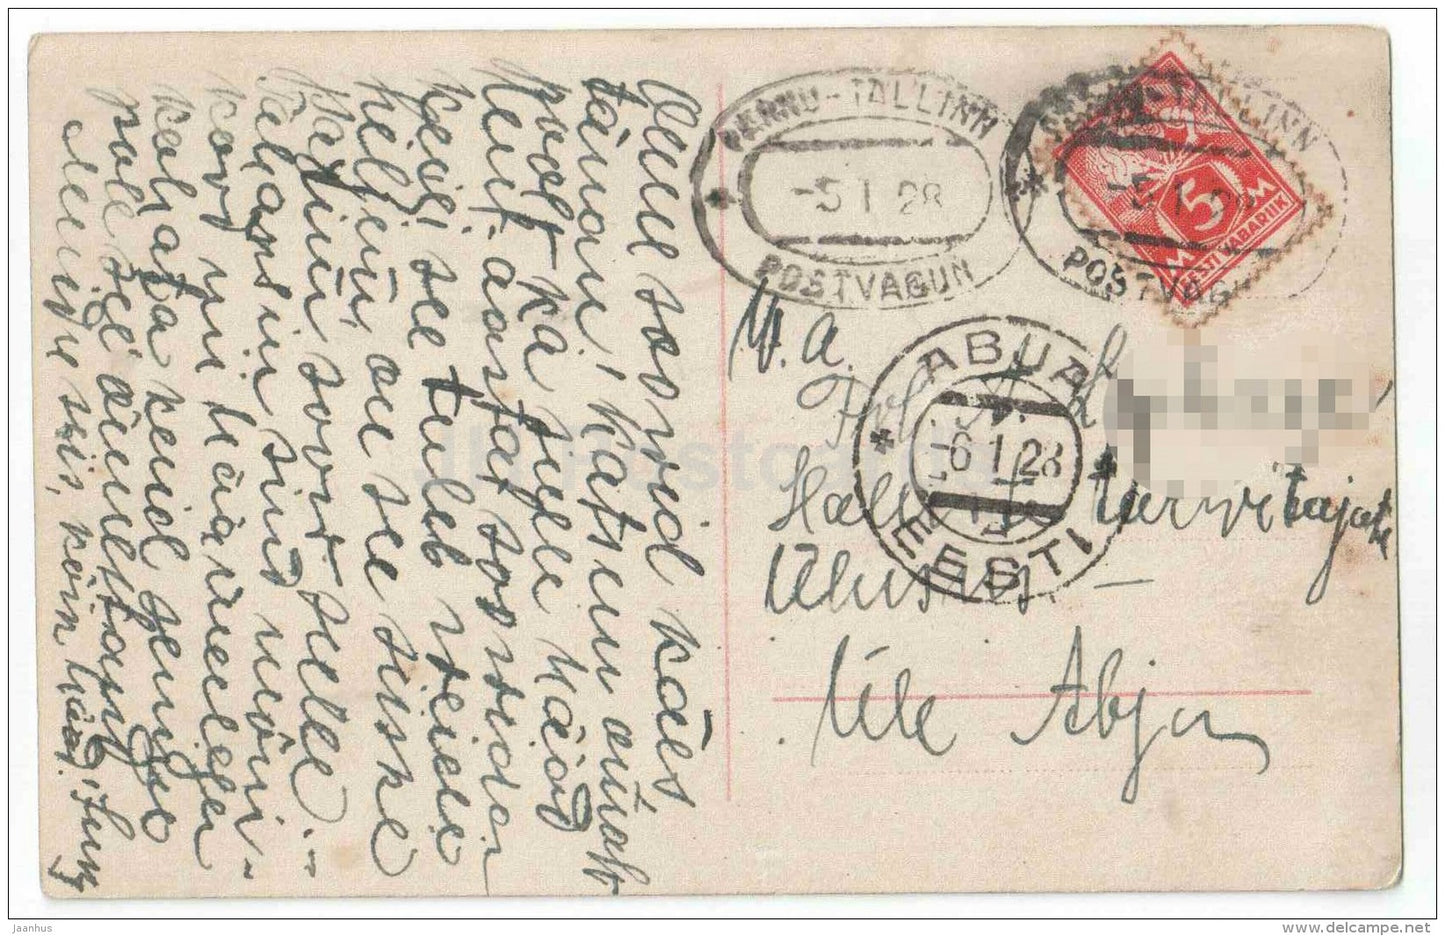 man and woman - couple - beachware - hat - Amag 6319/4 - circulated in Estonia Mail Wagon Pärnu-Tallinn 1928 - JH Postcards